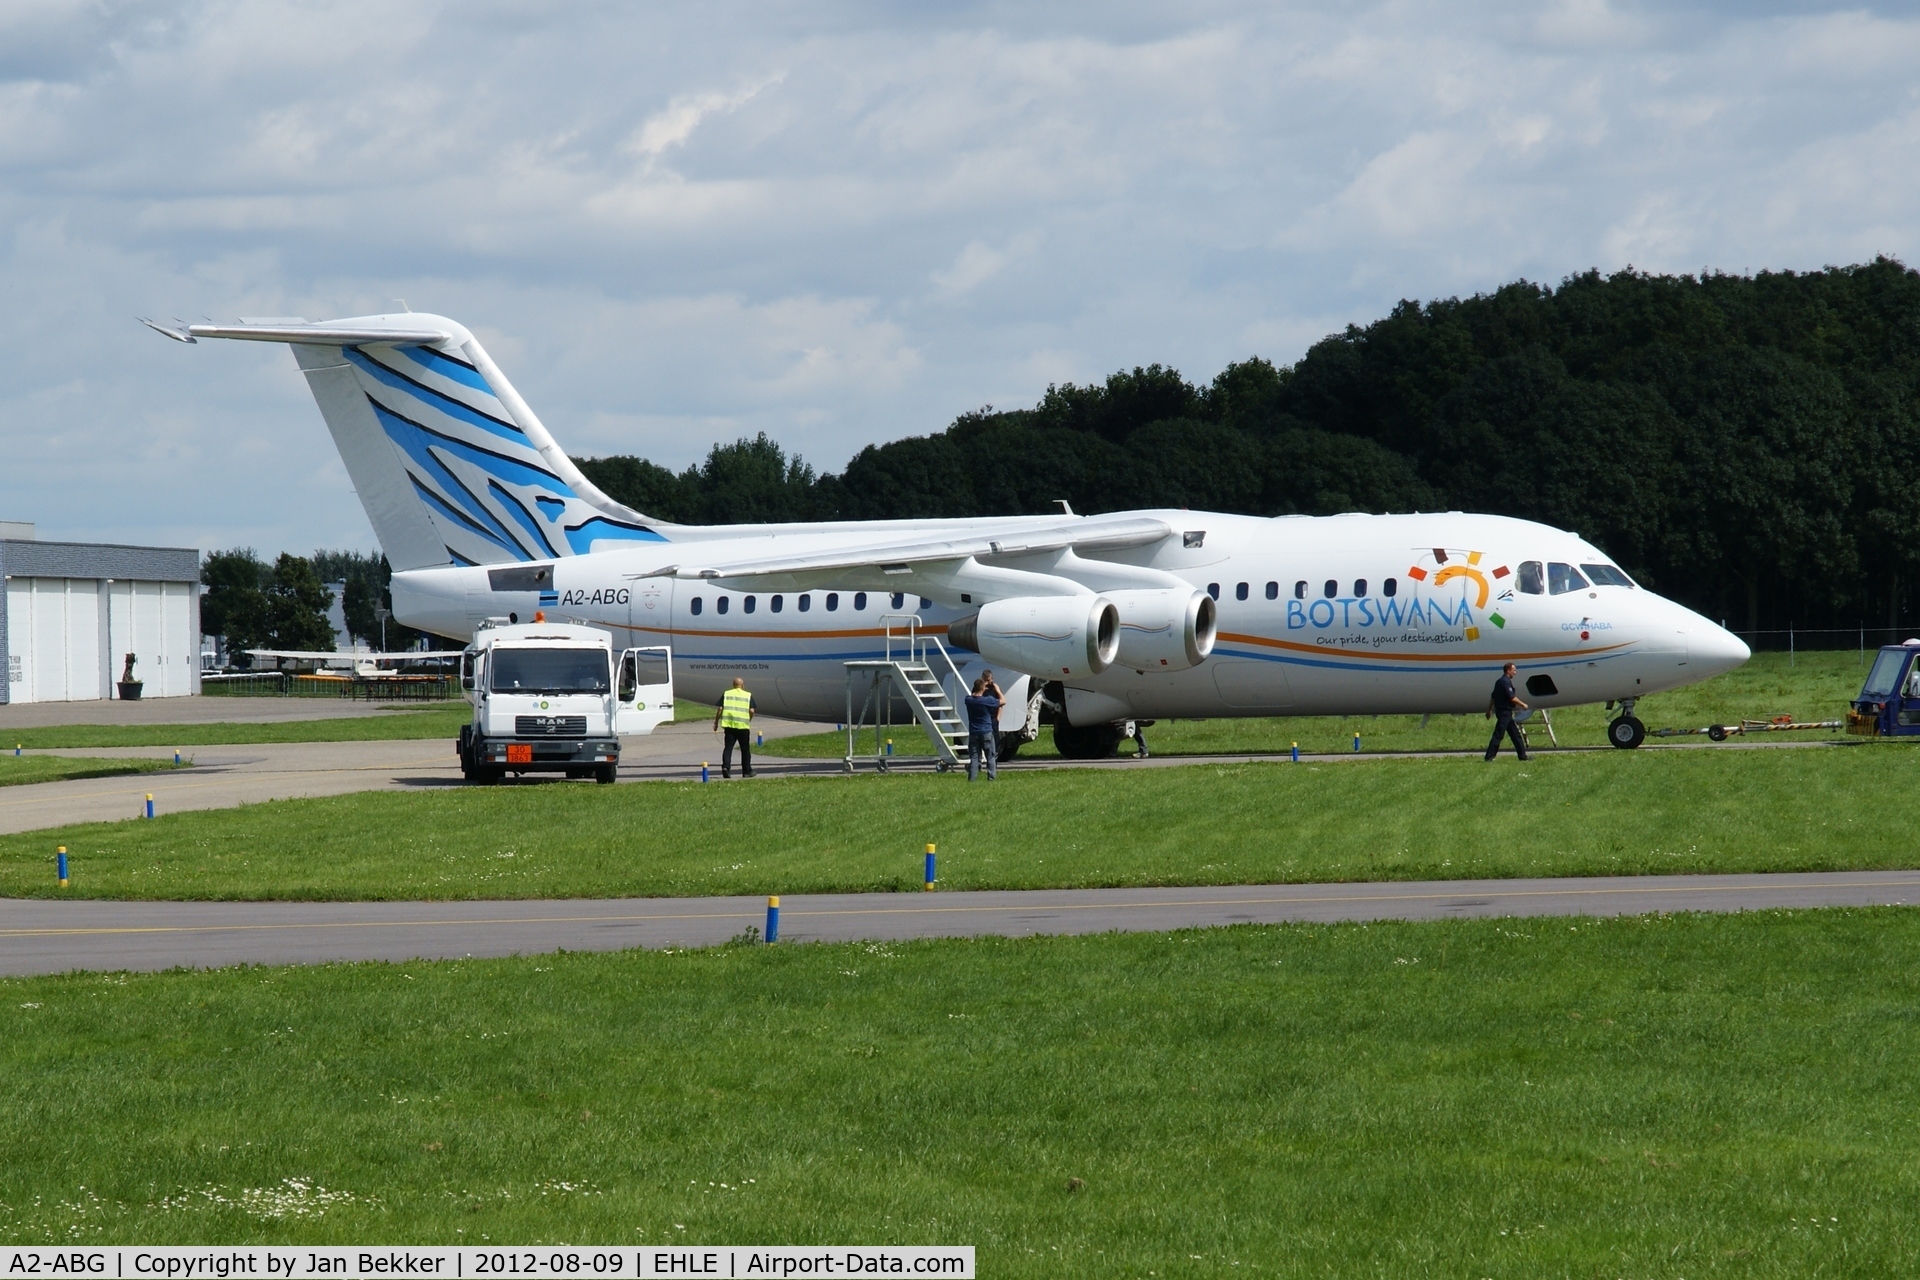 A2-ABG, 1997 British Aerospace Avro 146-RJ85 C/N E2303, Former D-AVRP. Just got its new livery of Air Botswana